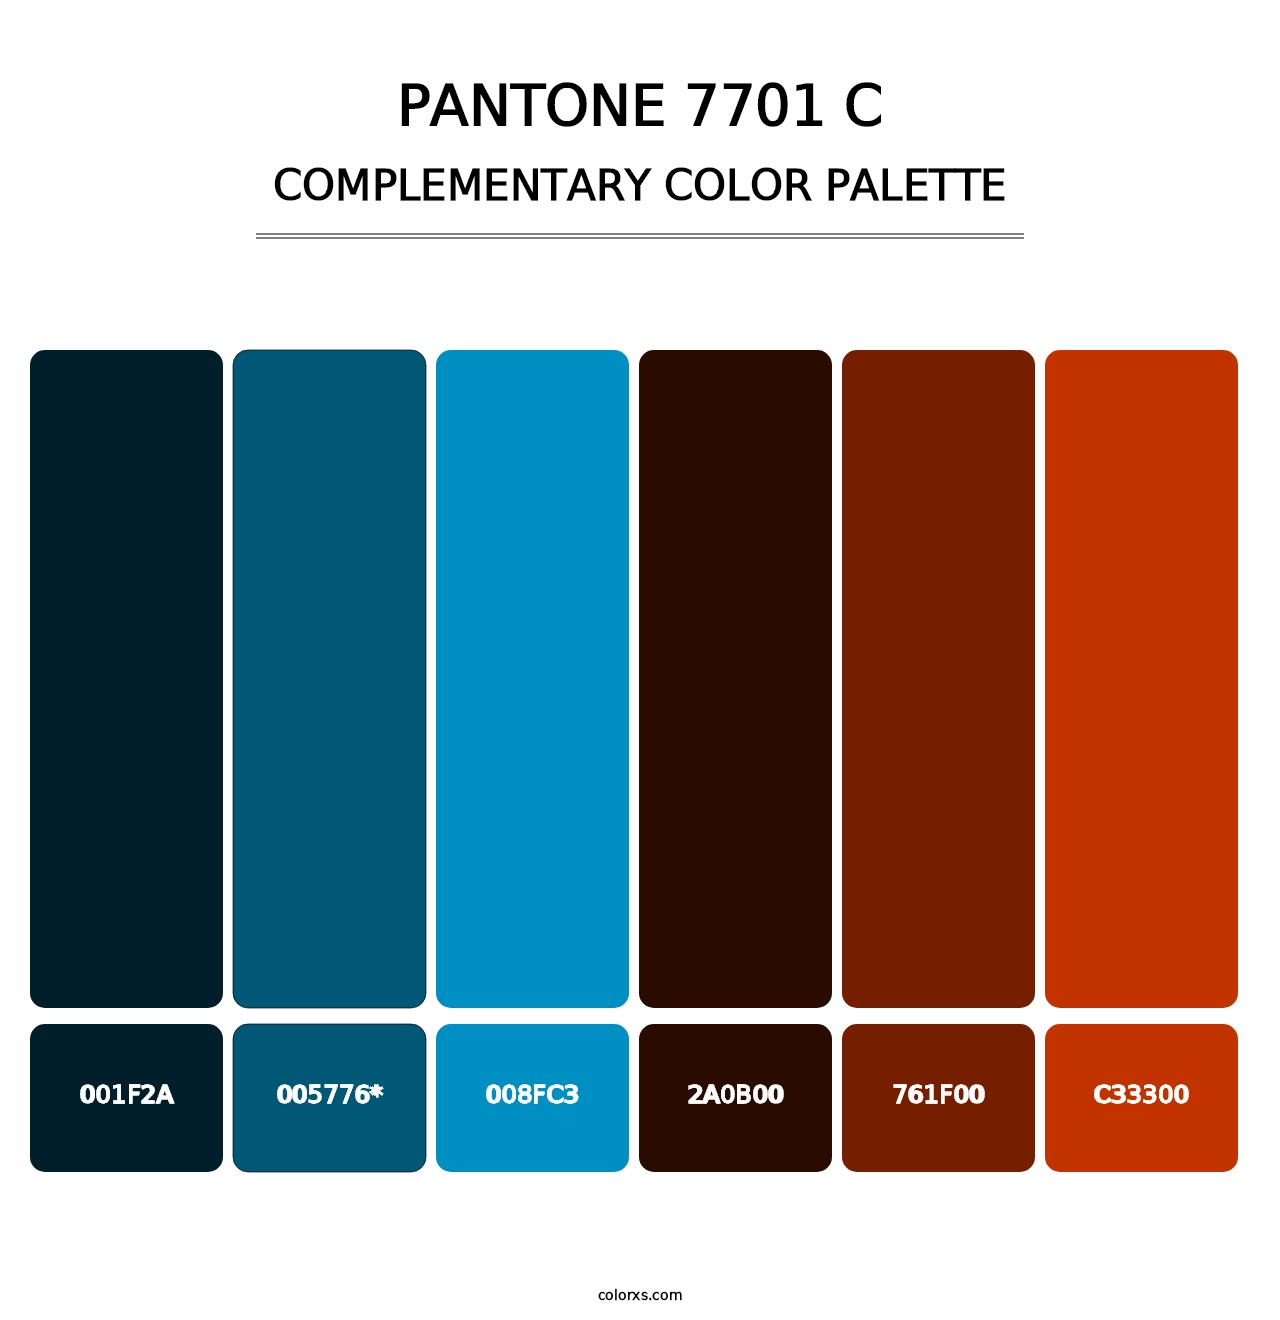 PANTONE 7701 C - Complementary Color Palette